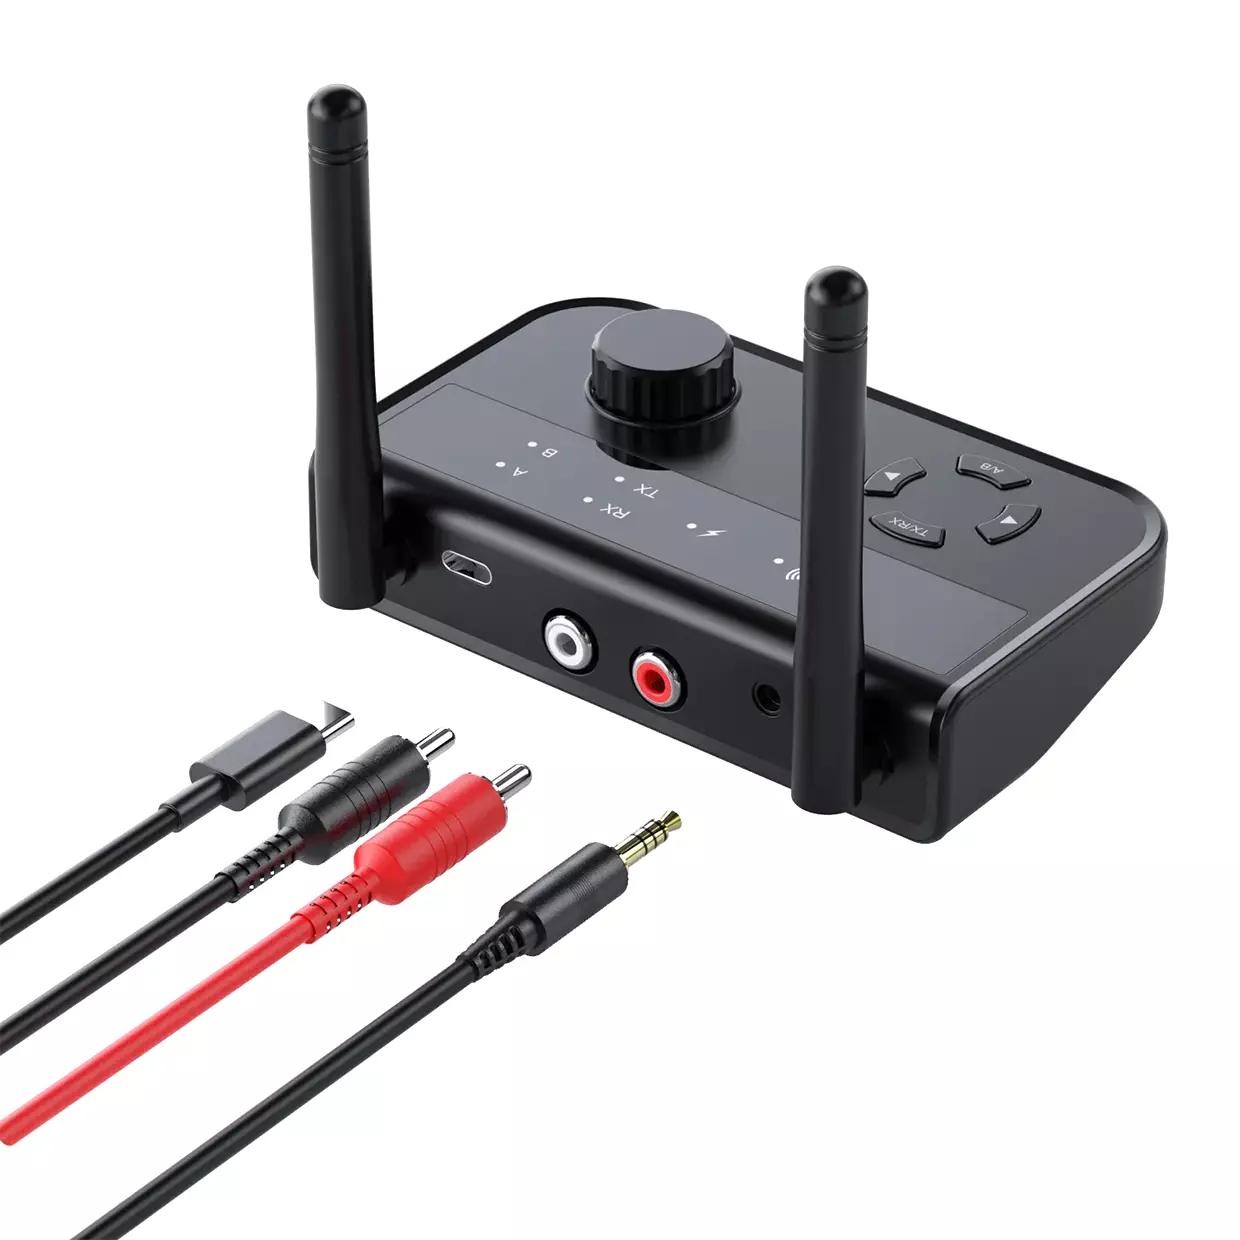  Receptor transmisor Bluetooth 5.1 para TV, adaptador Bluetooth  Jack de 0.138 in, transmisor receptor Bluetooth 3 en 1 para TV, proyector,  PC, automóvil, adaptador de audio Bluetooth para automóvil : Electrónica